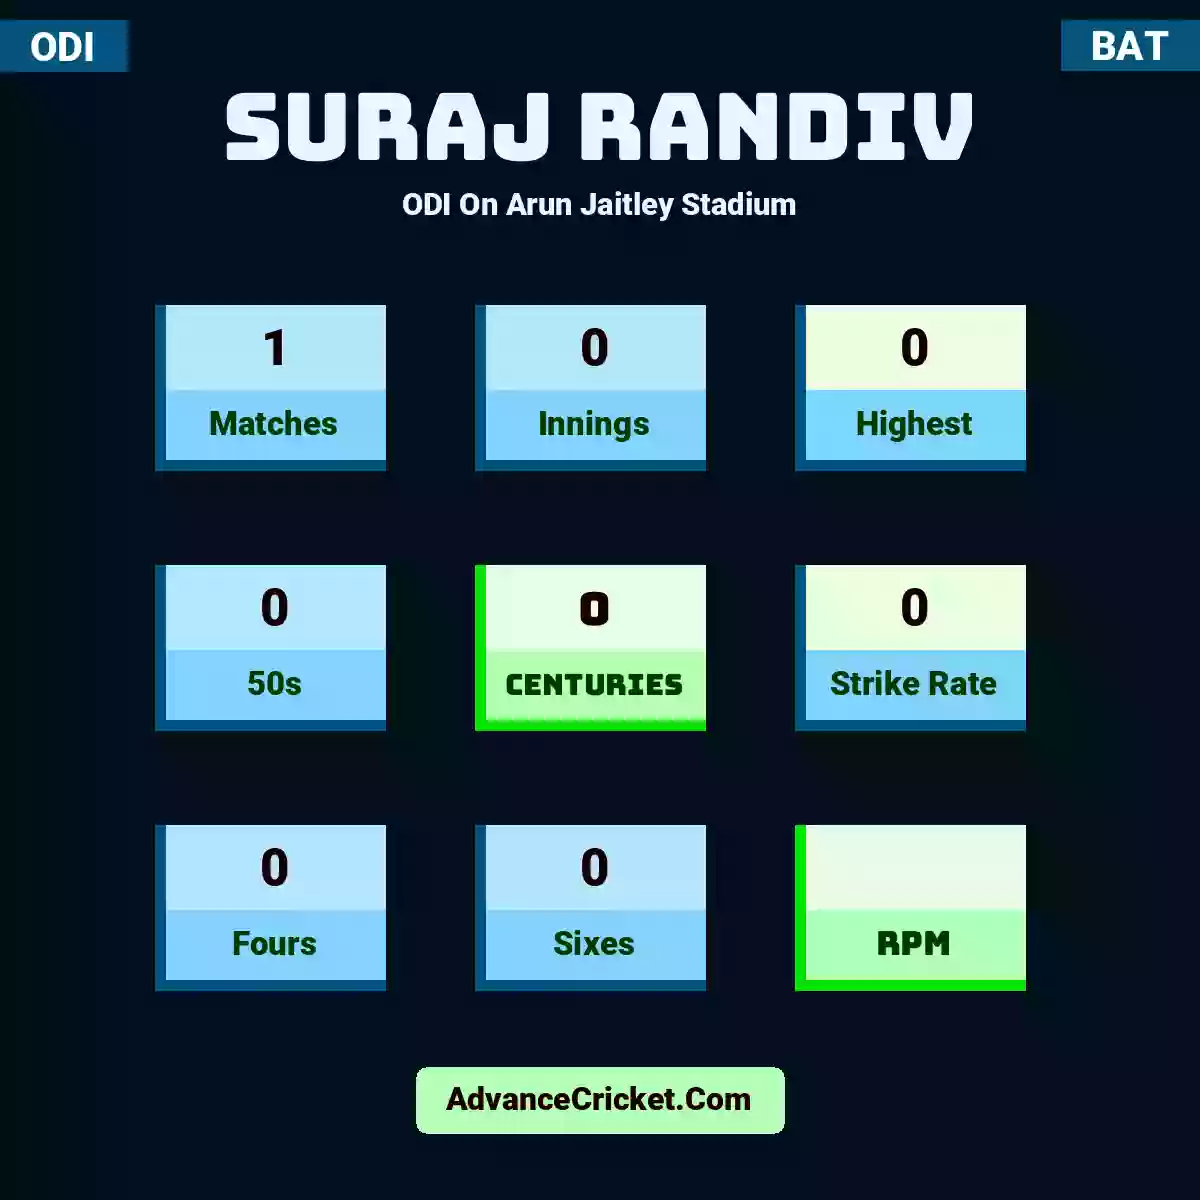 Suraj Randiv ODI  On Arun Jaitley Stadium, Suraj Randiv played 1 matches, scored 0 runs as highest, 0 half-centuries, and 0 centuries, with a strike rate of 0. S.Randiv hit 0 fours and 0 sixes.